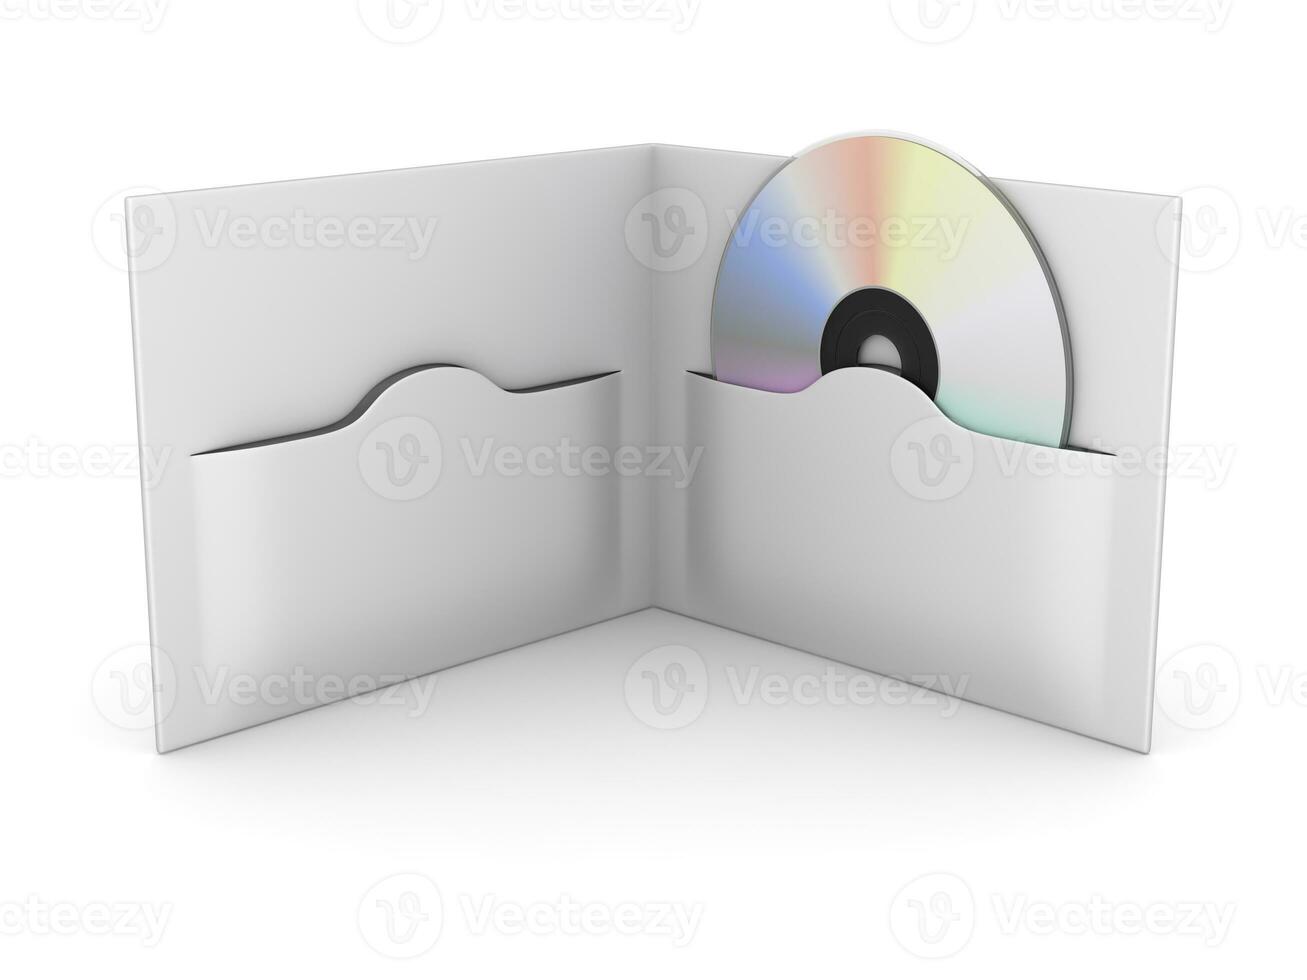 CD eller dvd låda foto